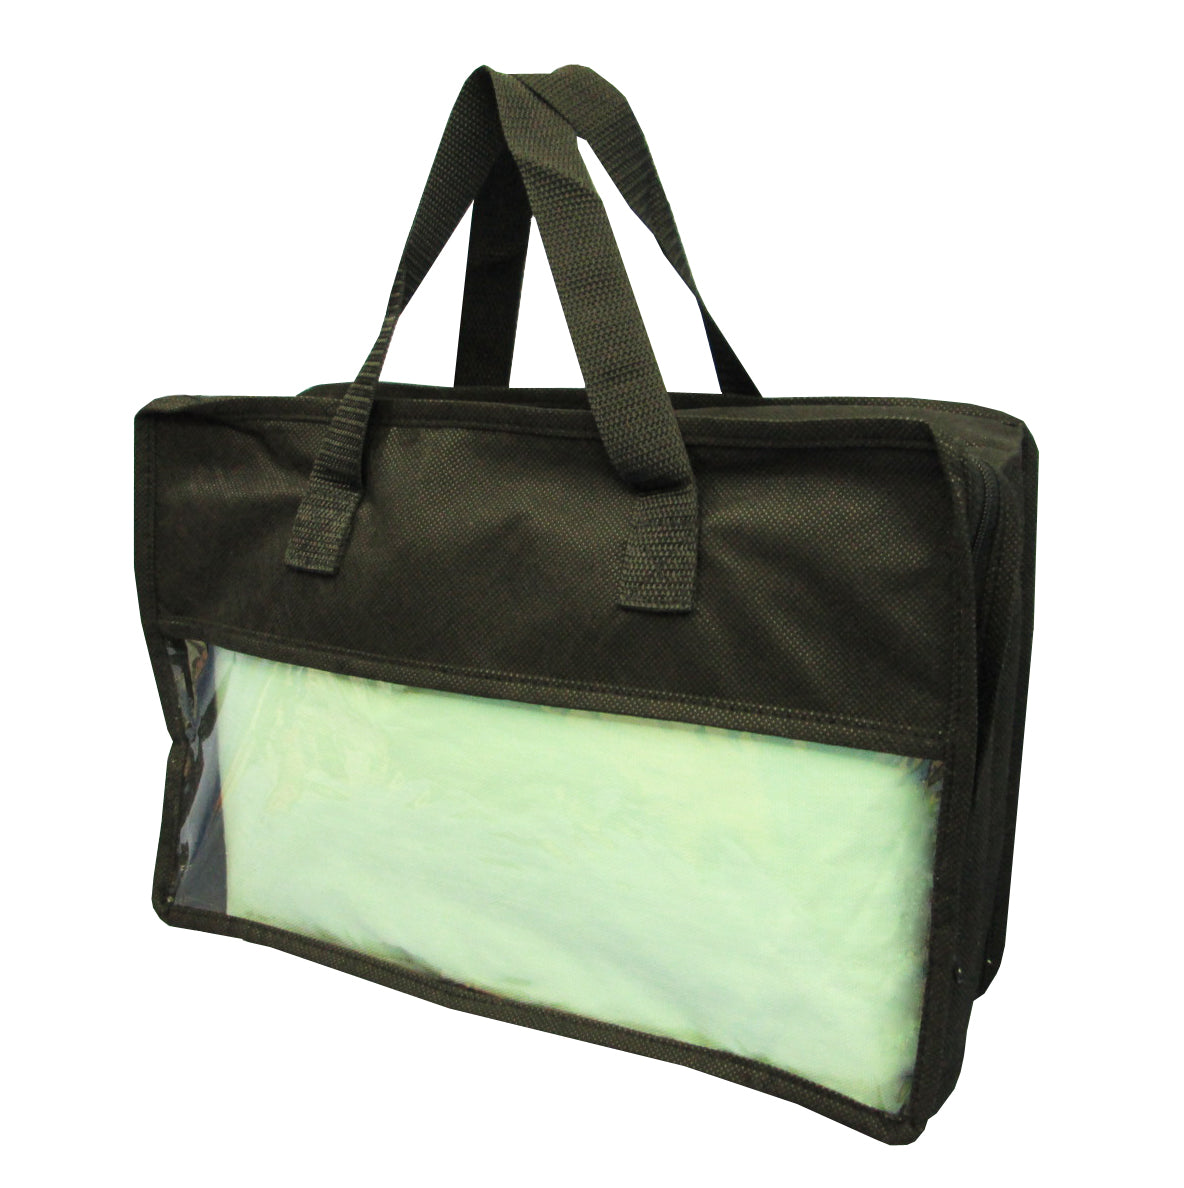 JLSB-0021 Sewn Bag